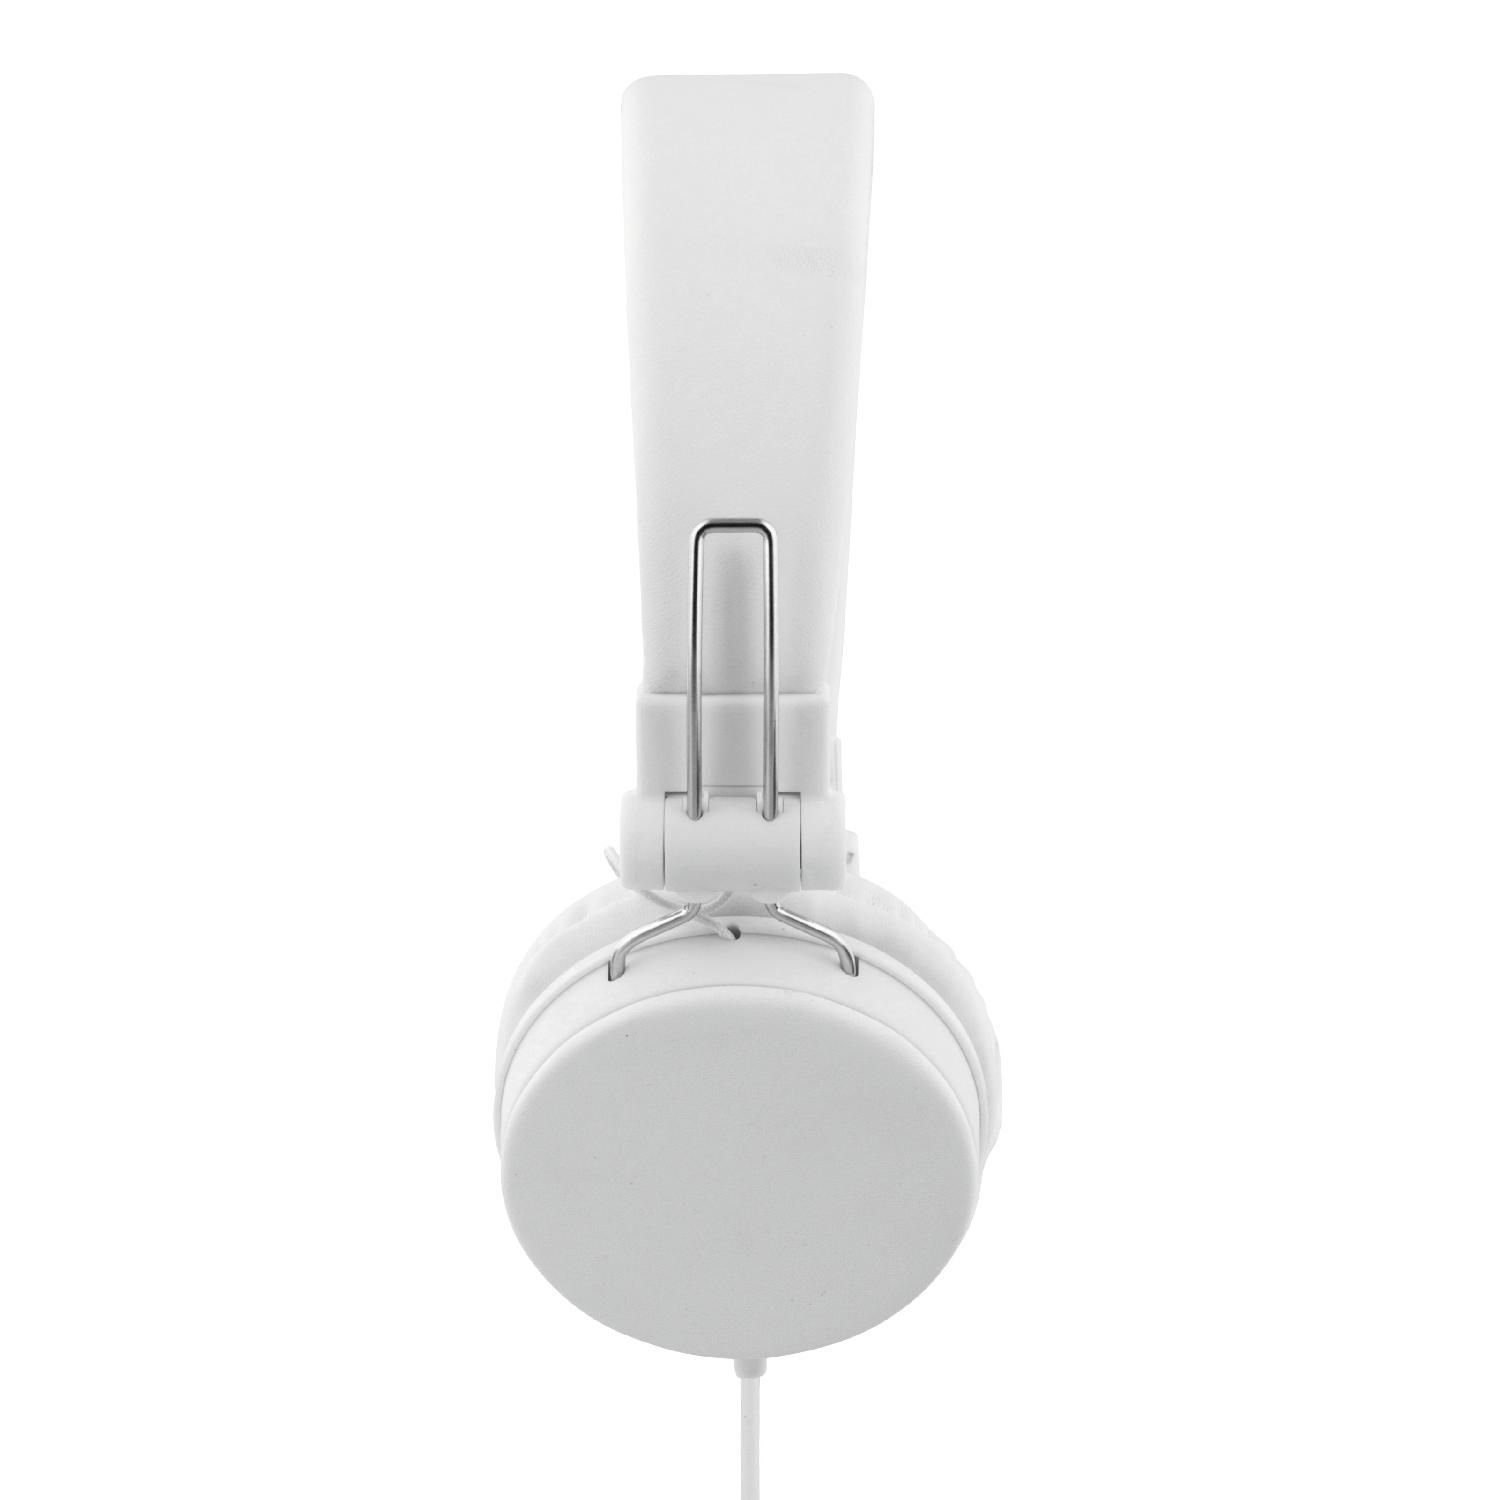 STREETZ Kopfhörer 1,2m Kabel faltbares (integriertes 3.5mm Headset, Herstellergarantie) Jahre Ohrpolster 5 weiß Klinkenanschluss On-Ear-Kopfhörer Mikrofon, inkl